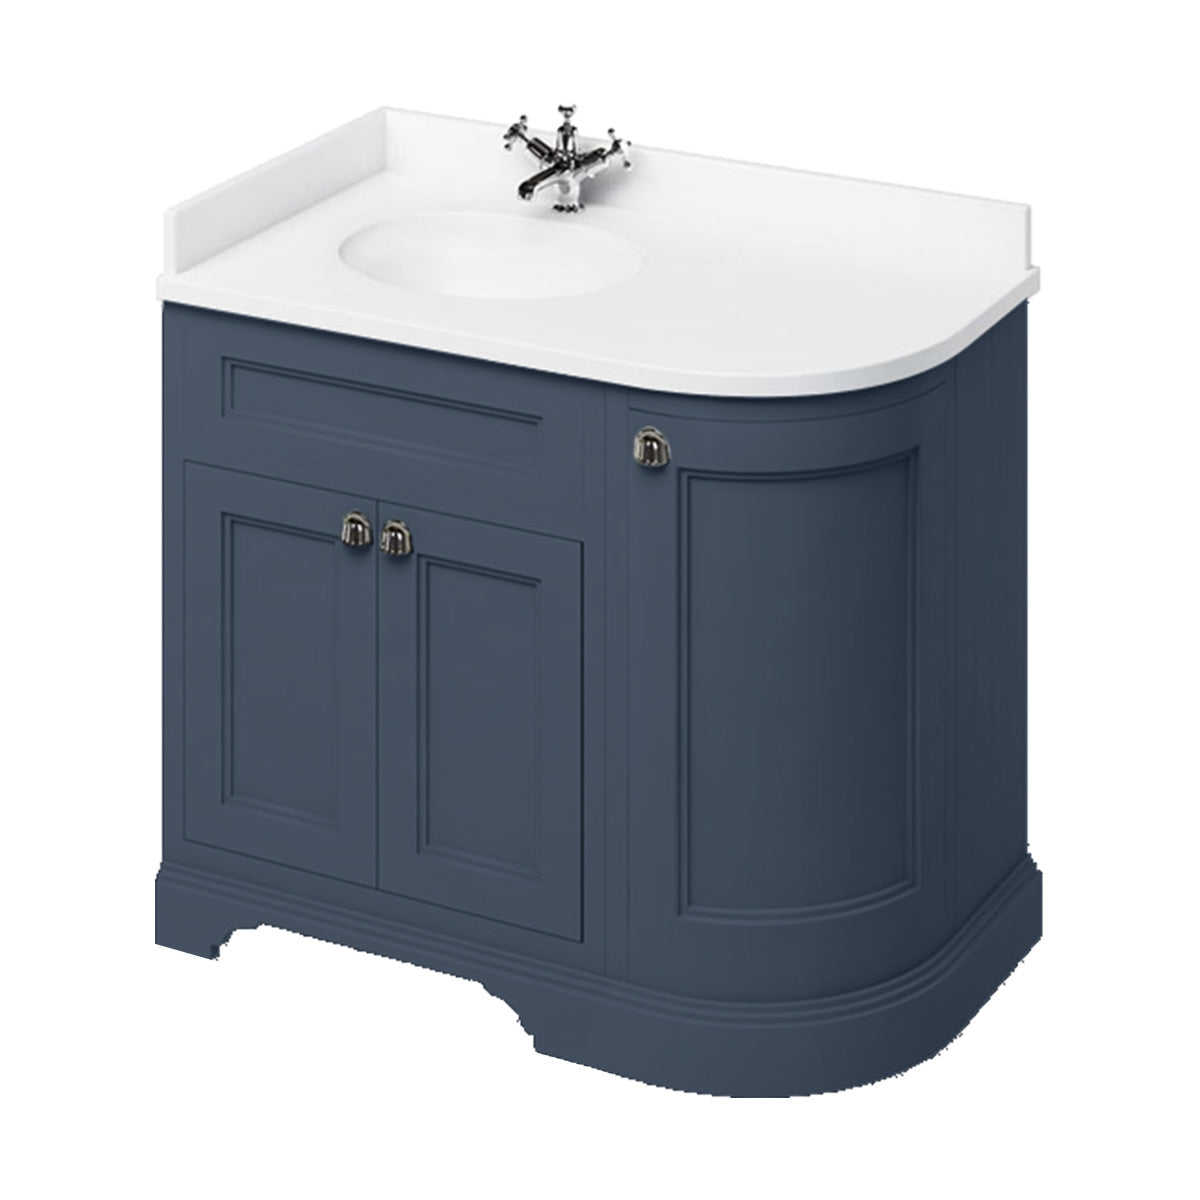 burlington 1000 LH curved freestanding 2 door vanity unit with basin and white worktop lifestyle matt blue